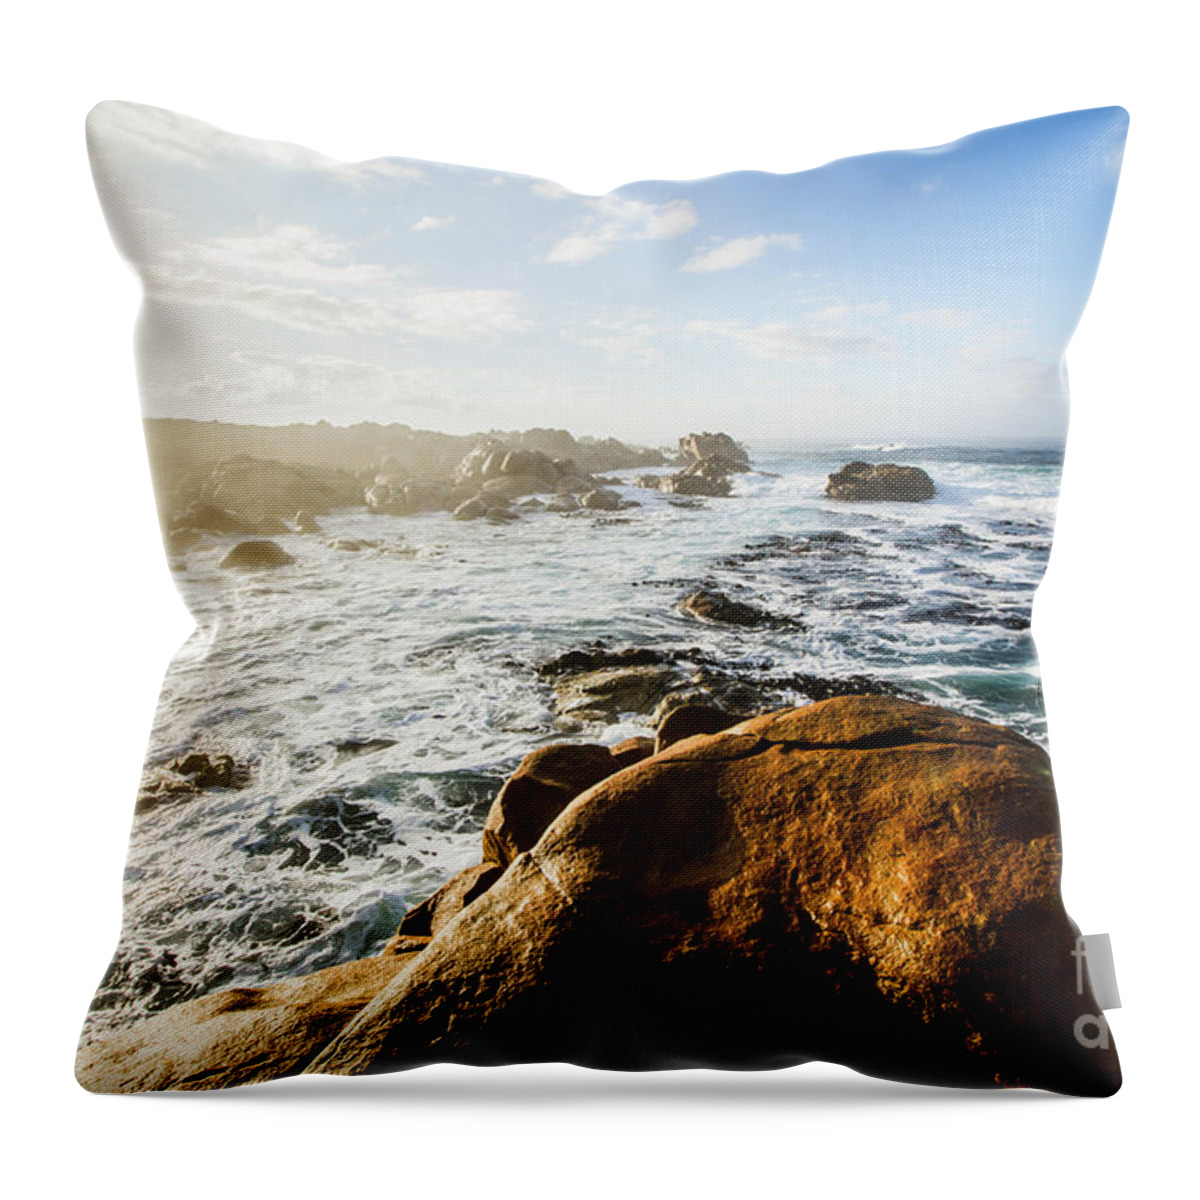 Tasmania Throw Pillow featuring the photograph Pristine Tasmanian coast by Jorgo Photography